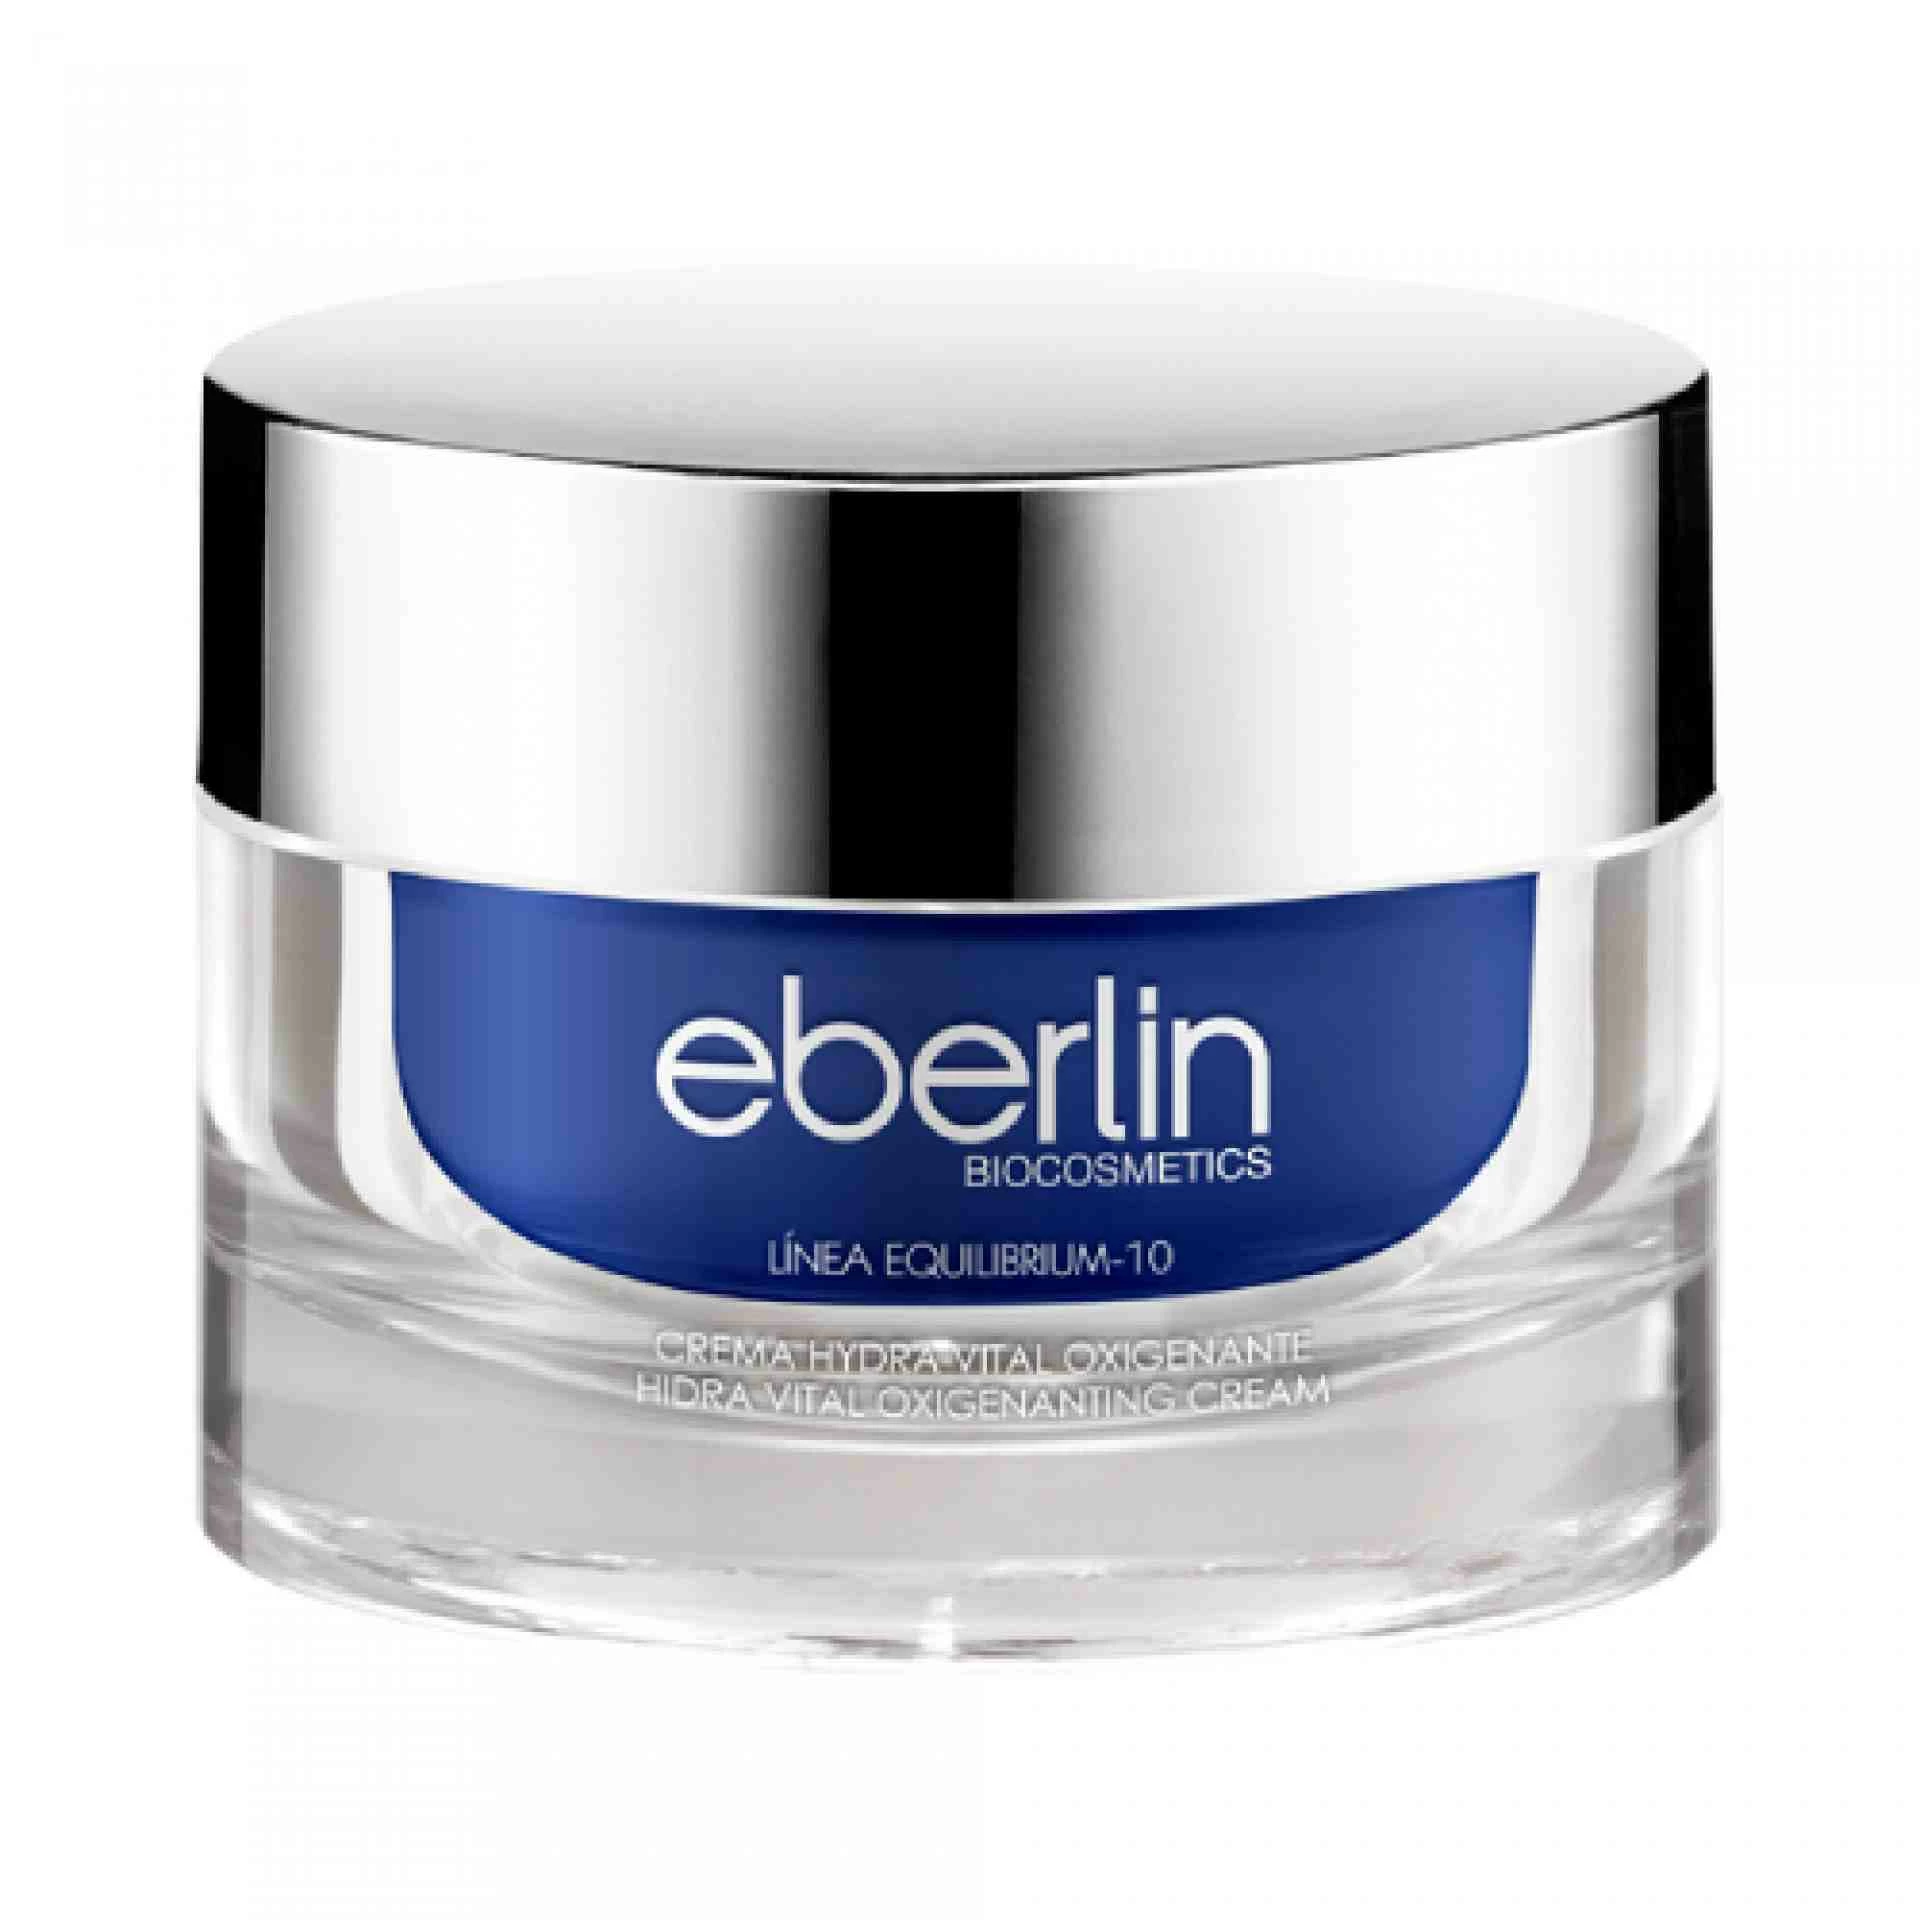 Crema Hydra Vital Oxigenante 50 ml - Línea Equilibrium-10 - Eberlin ®